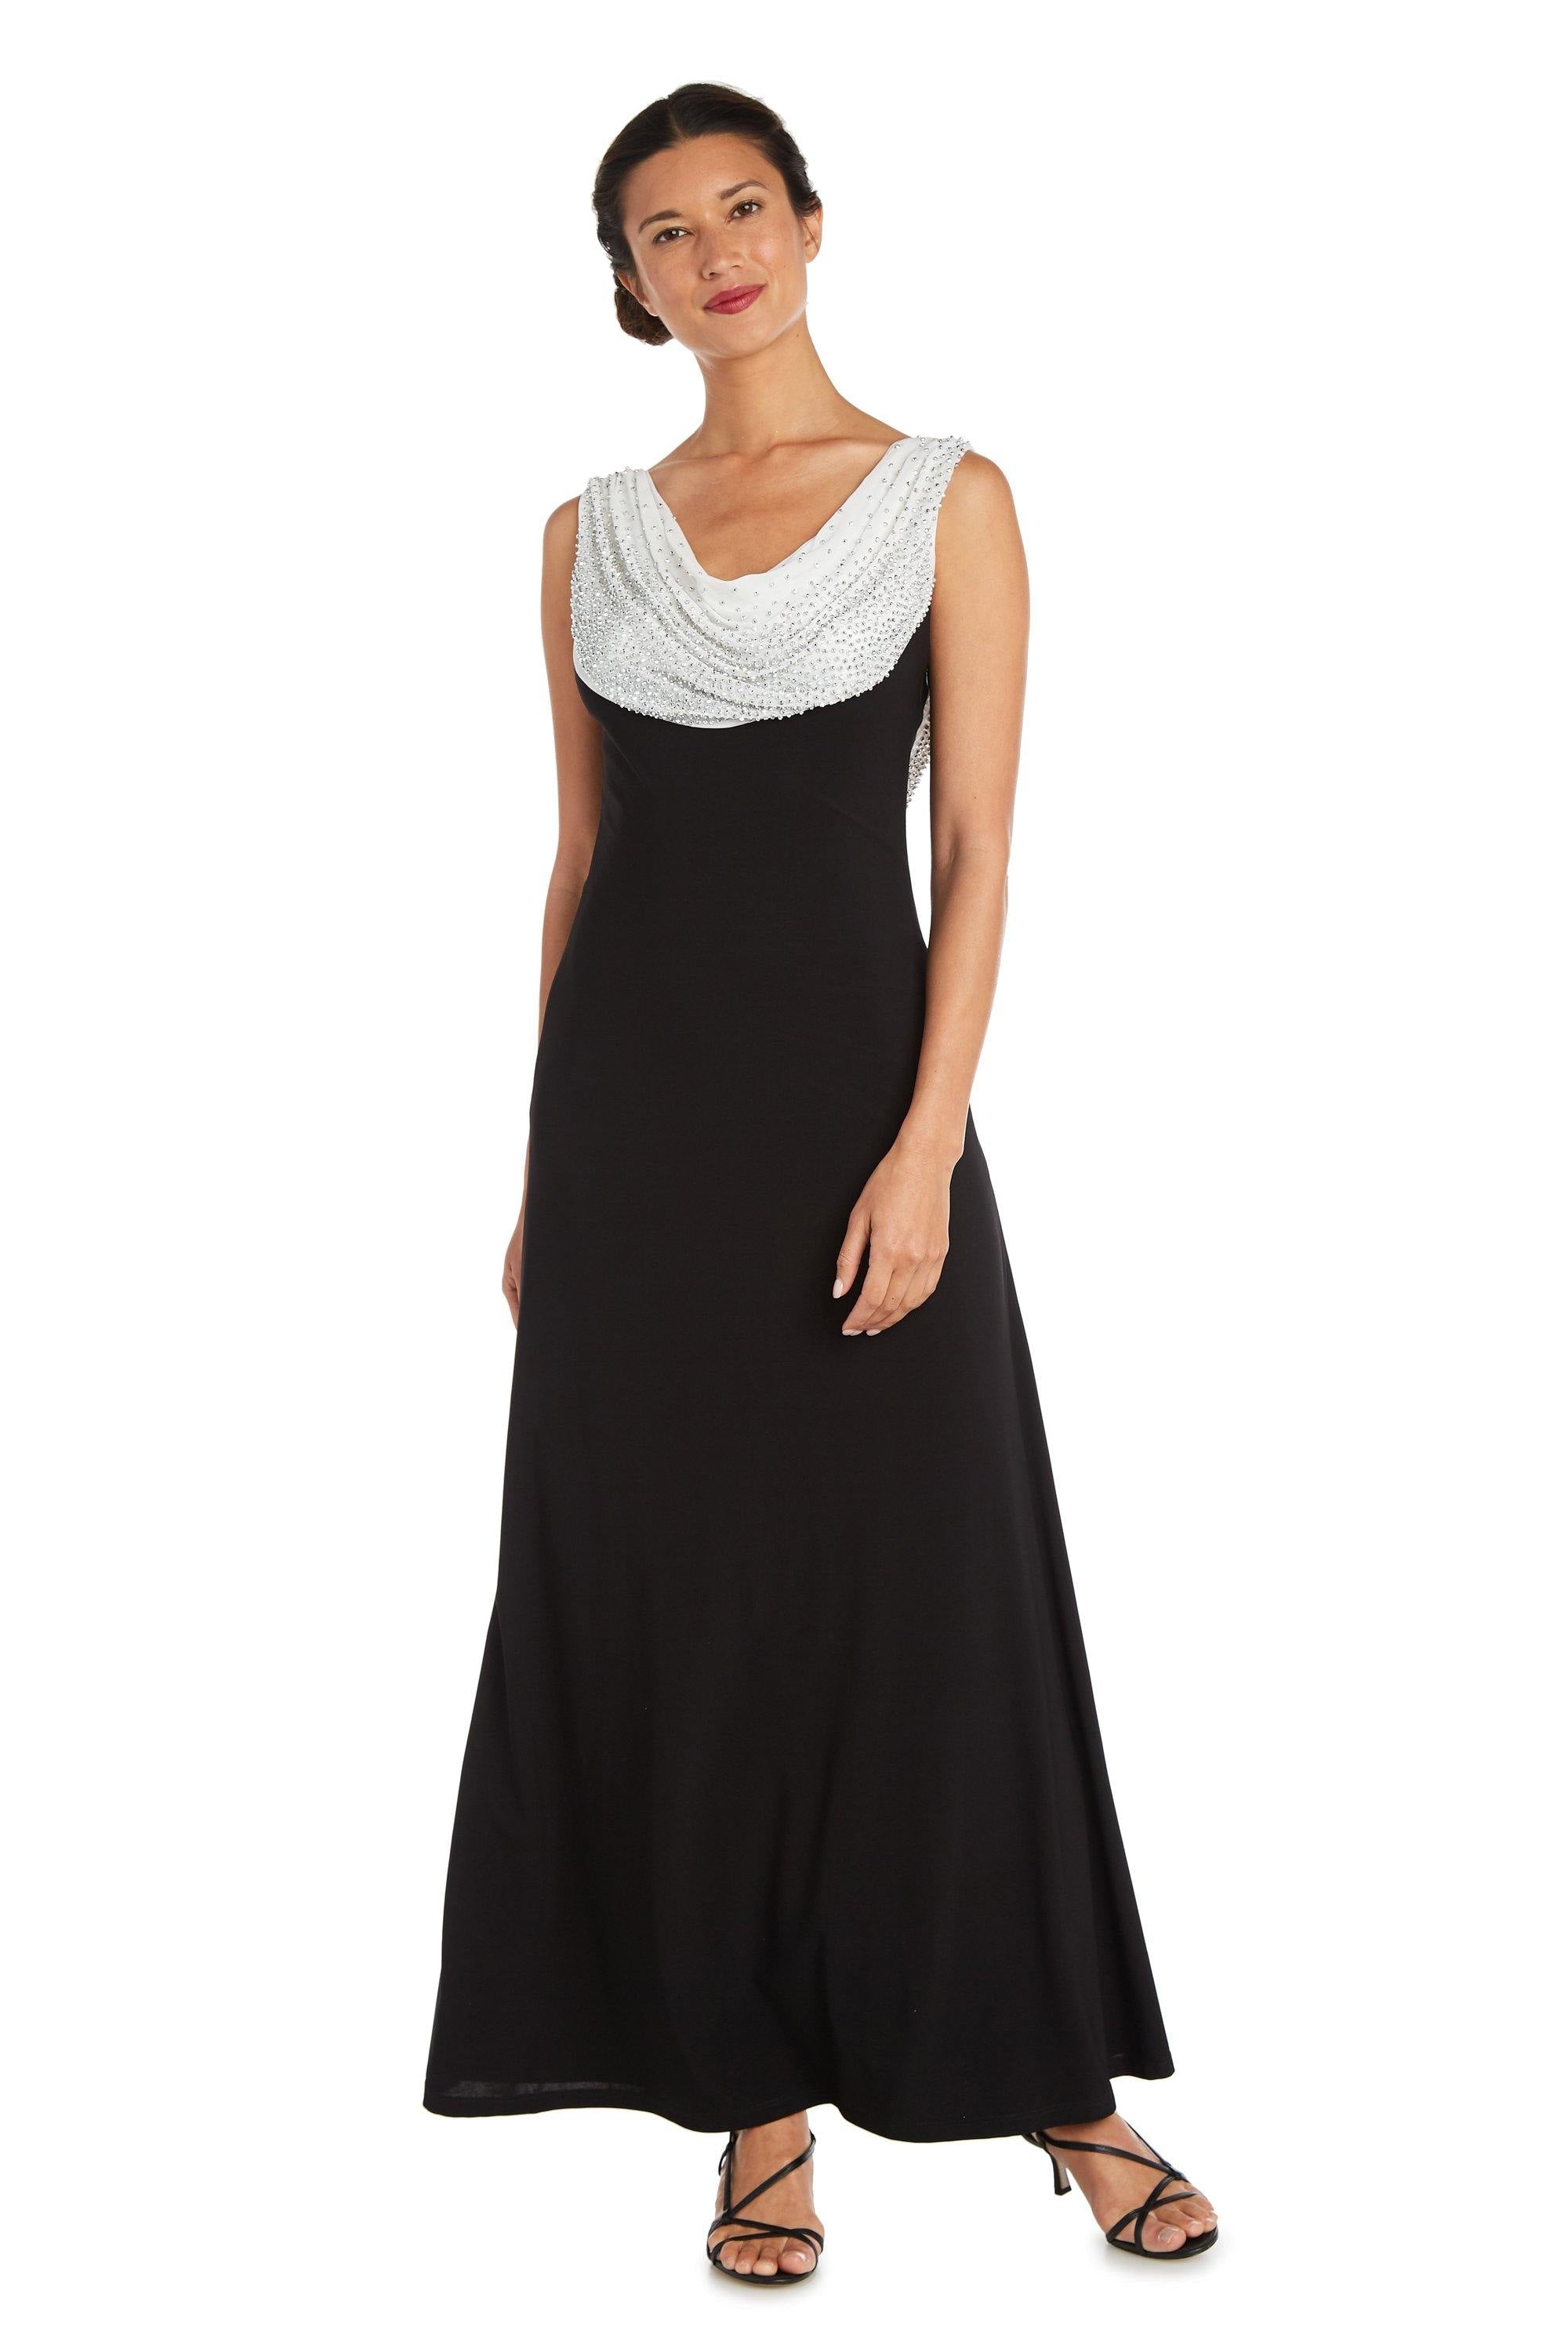 R&M Richards Long Formal Beaded Petite Dress 9773P - The Dress Outlet